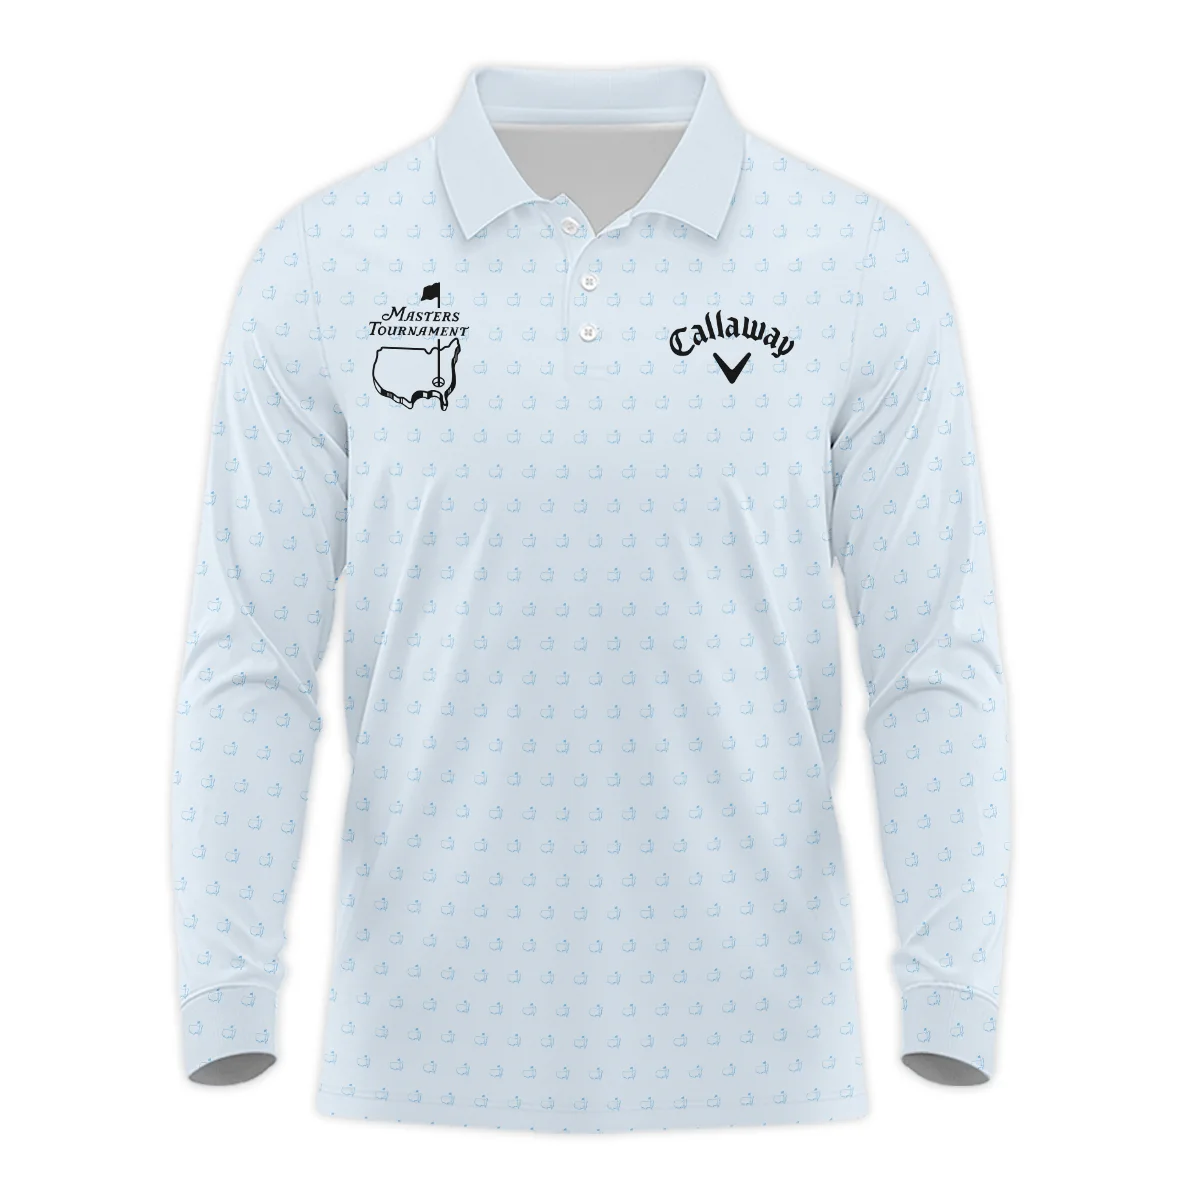 Pattern Masters Tournament Callaway Hoodie Shirt White Light Blue Color Pattern Logo  Hoodie Shirt